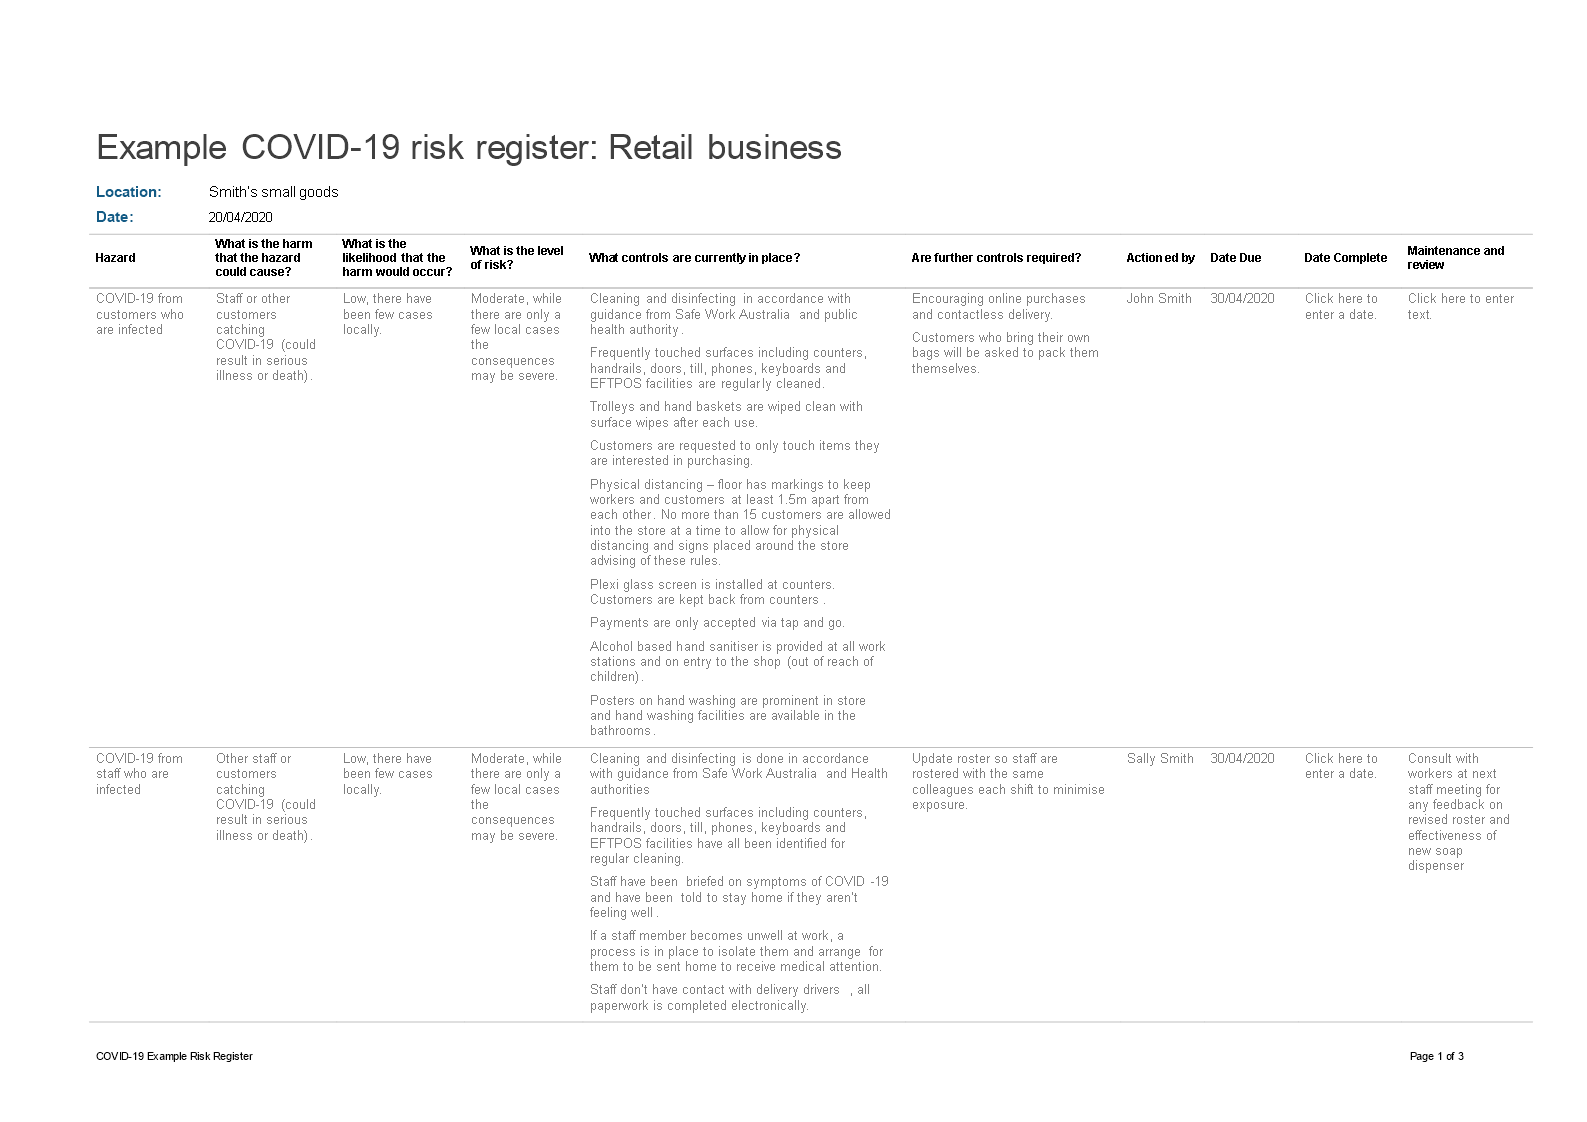 covid19 retail business risk register plantilla imagen principal